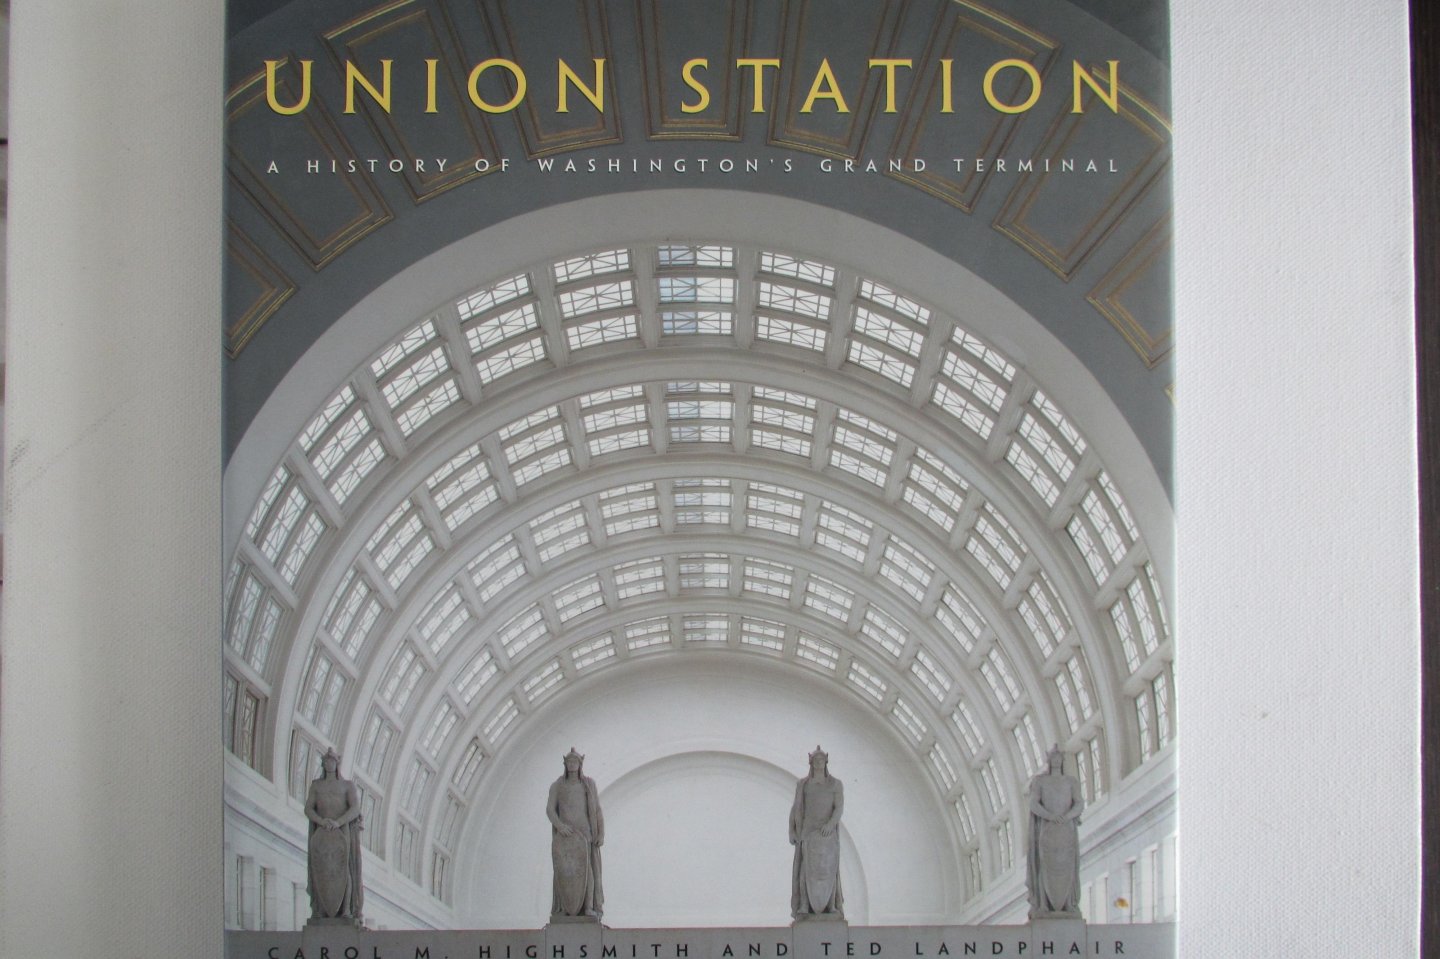 Highsmith, Carol M. en Ted Landphair - Union Station - a history of Washington's grand terminal - spoorwegen